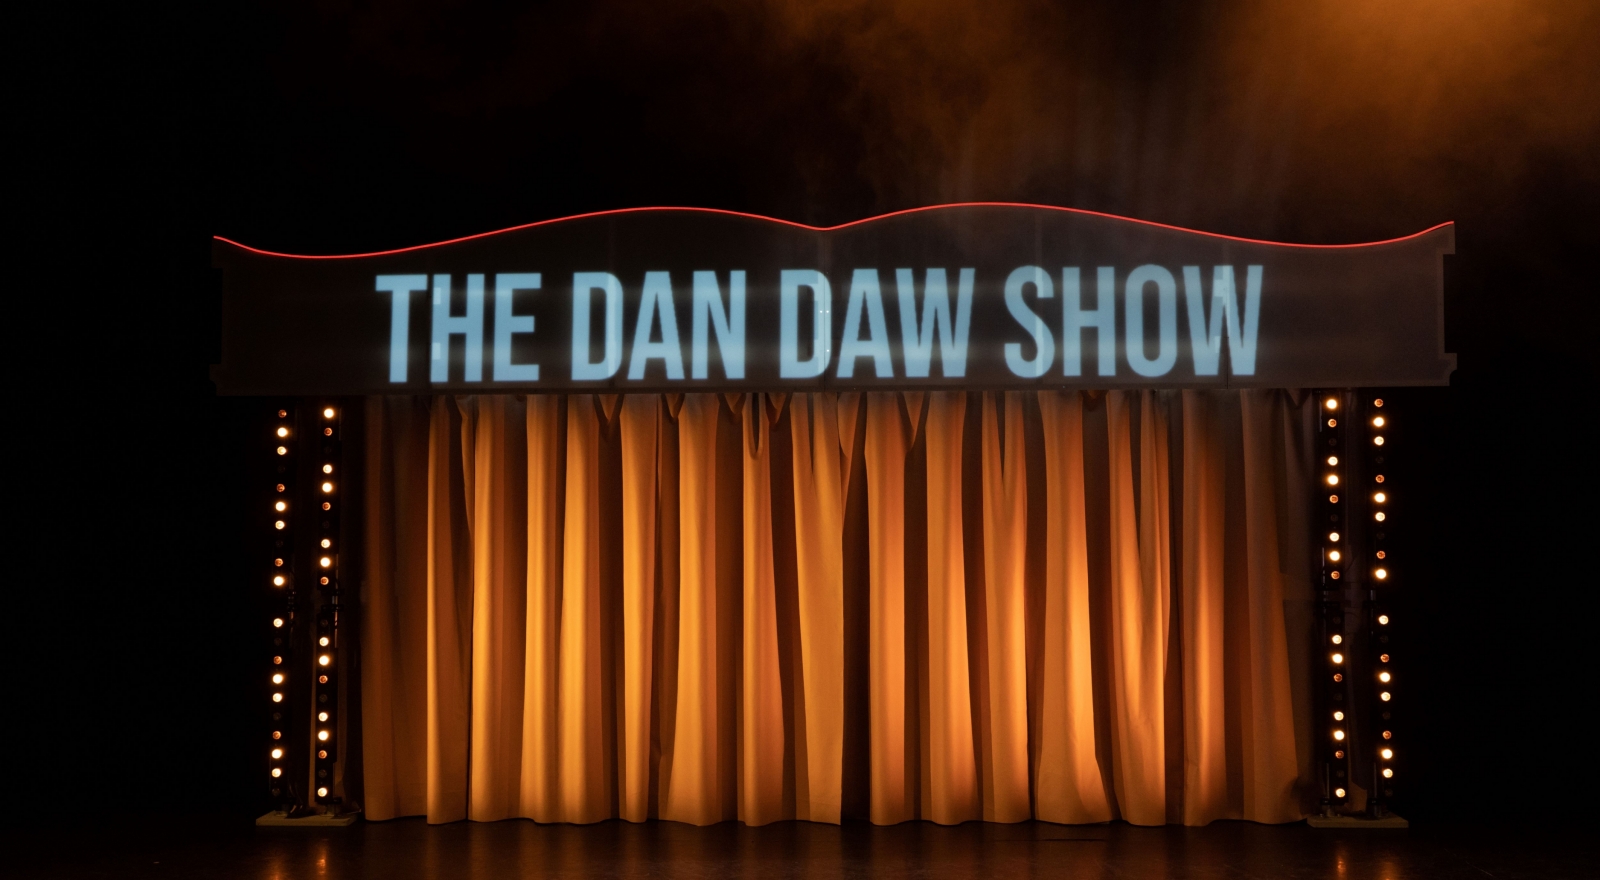 The Dan Daw Show